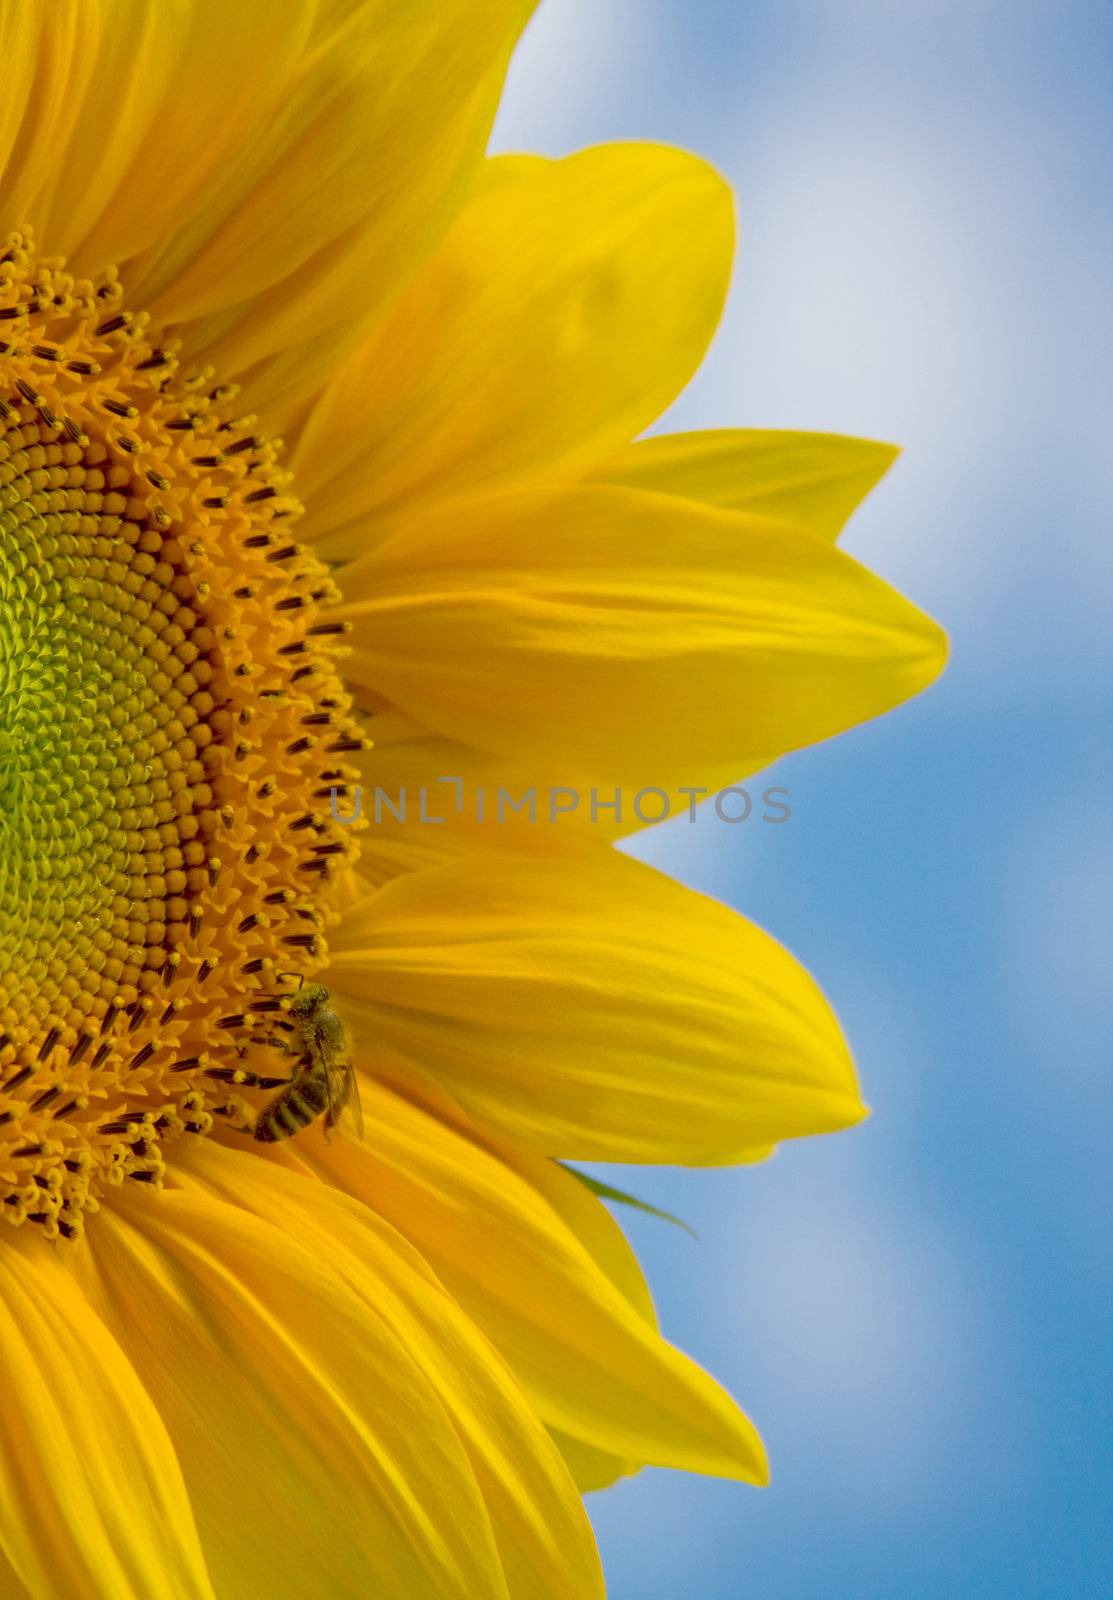 Beautiful sunflower against a blue sky